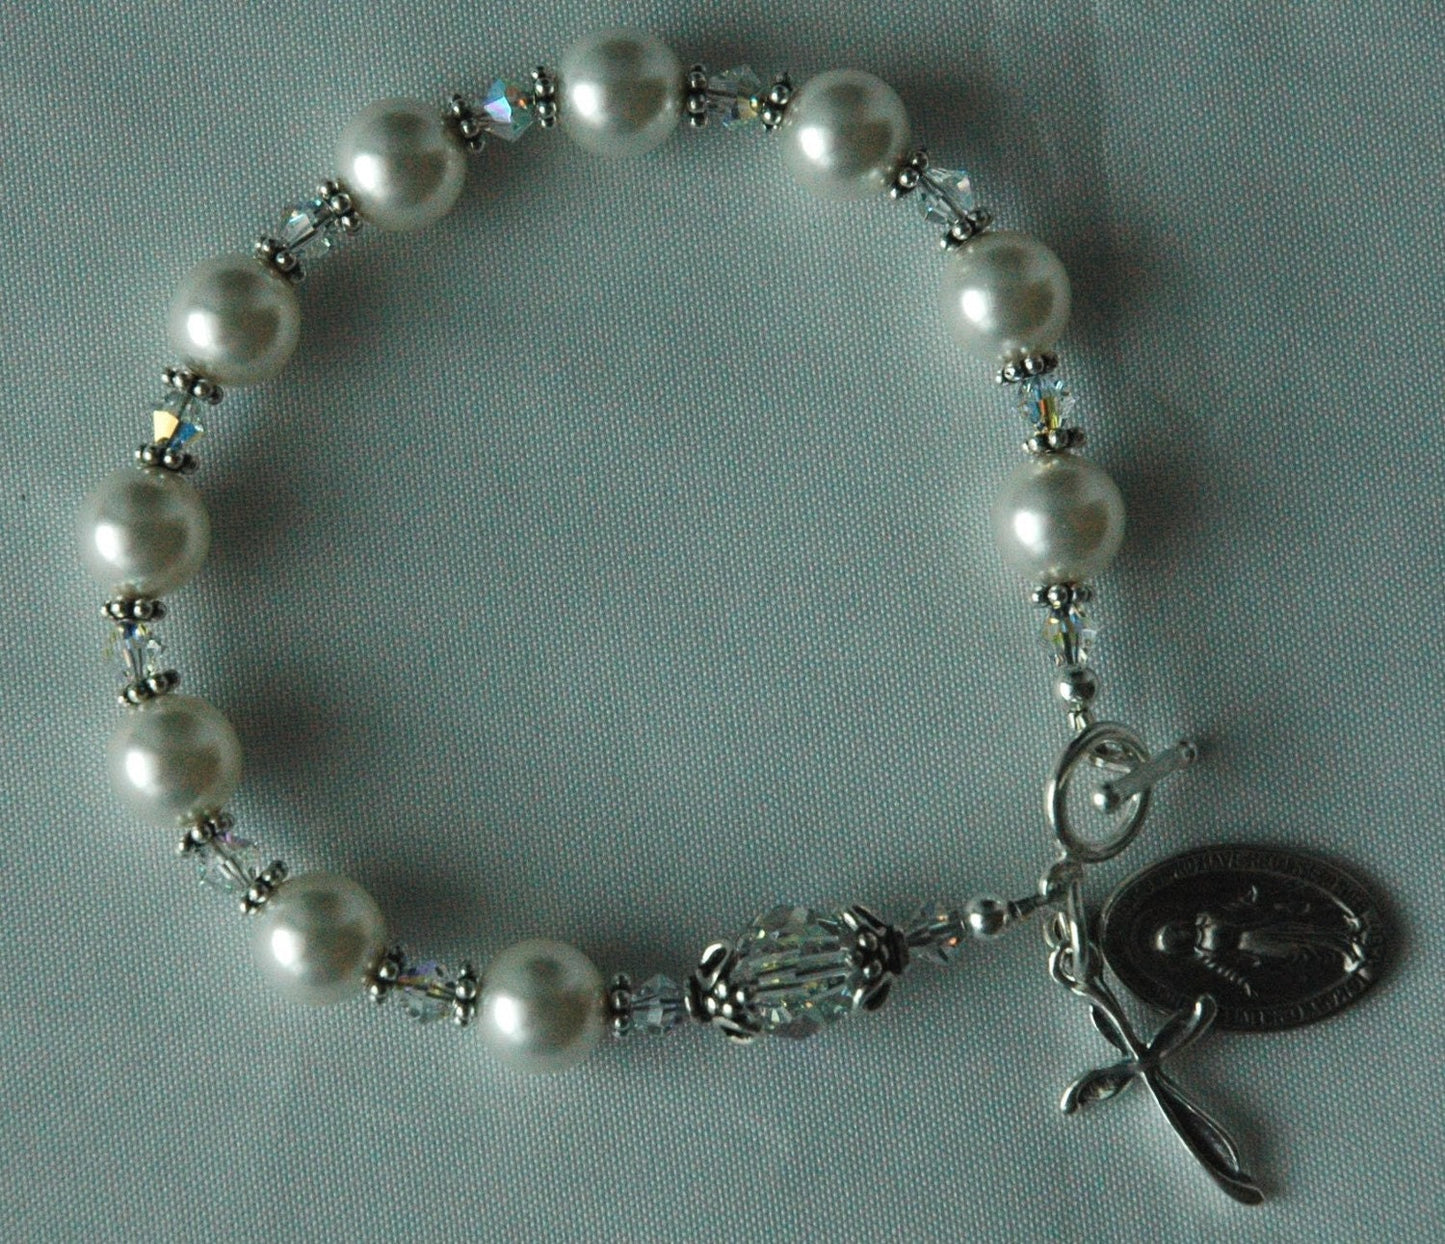 Silver Pearl Rosary Bracelet,Communion Pearl Rosary Bracelet,Confirmation Bracelet, Chaplet Rosary Bracelet,Catholic Bride Pearl Rosary